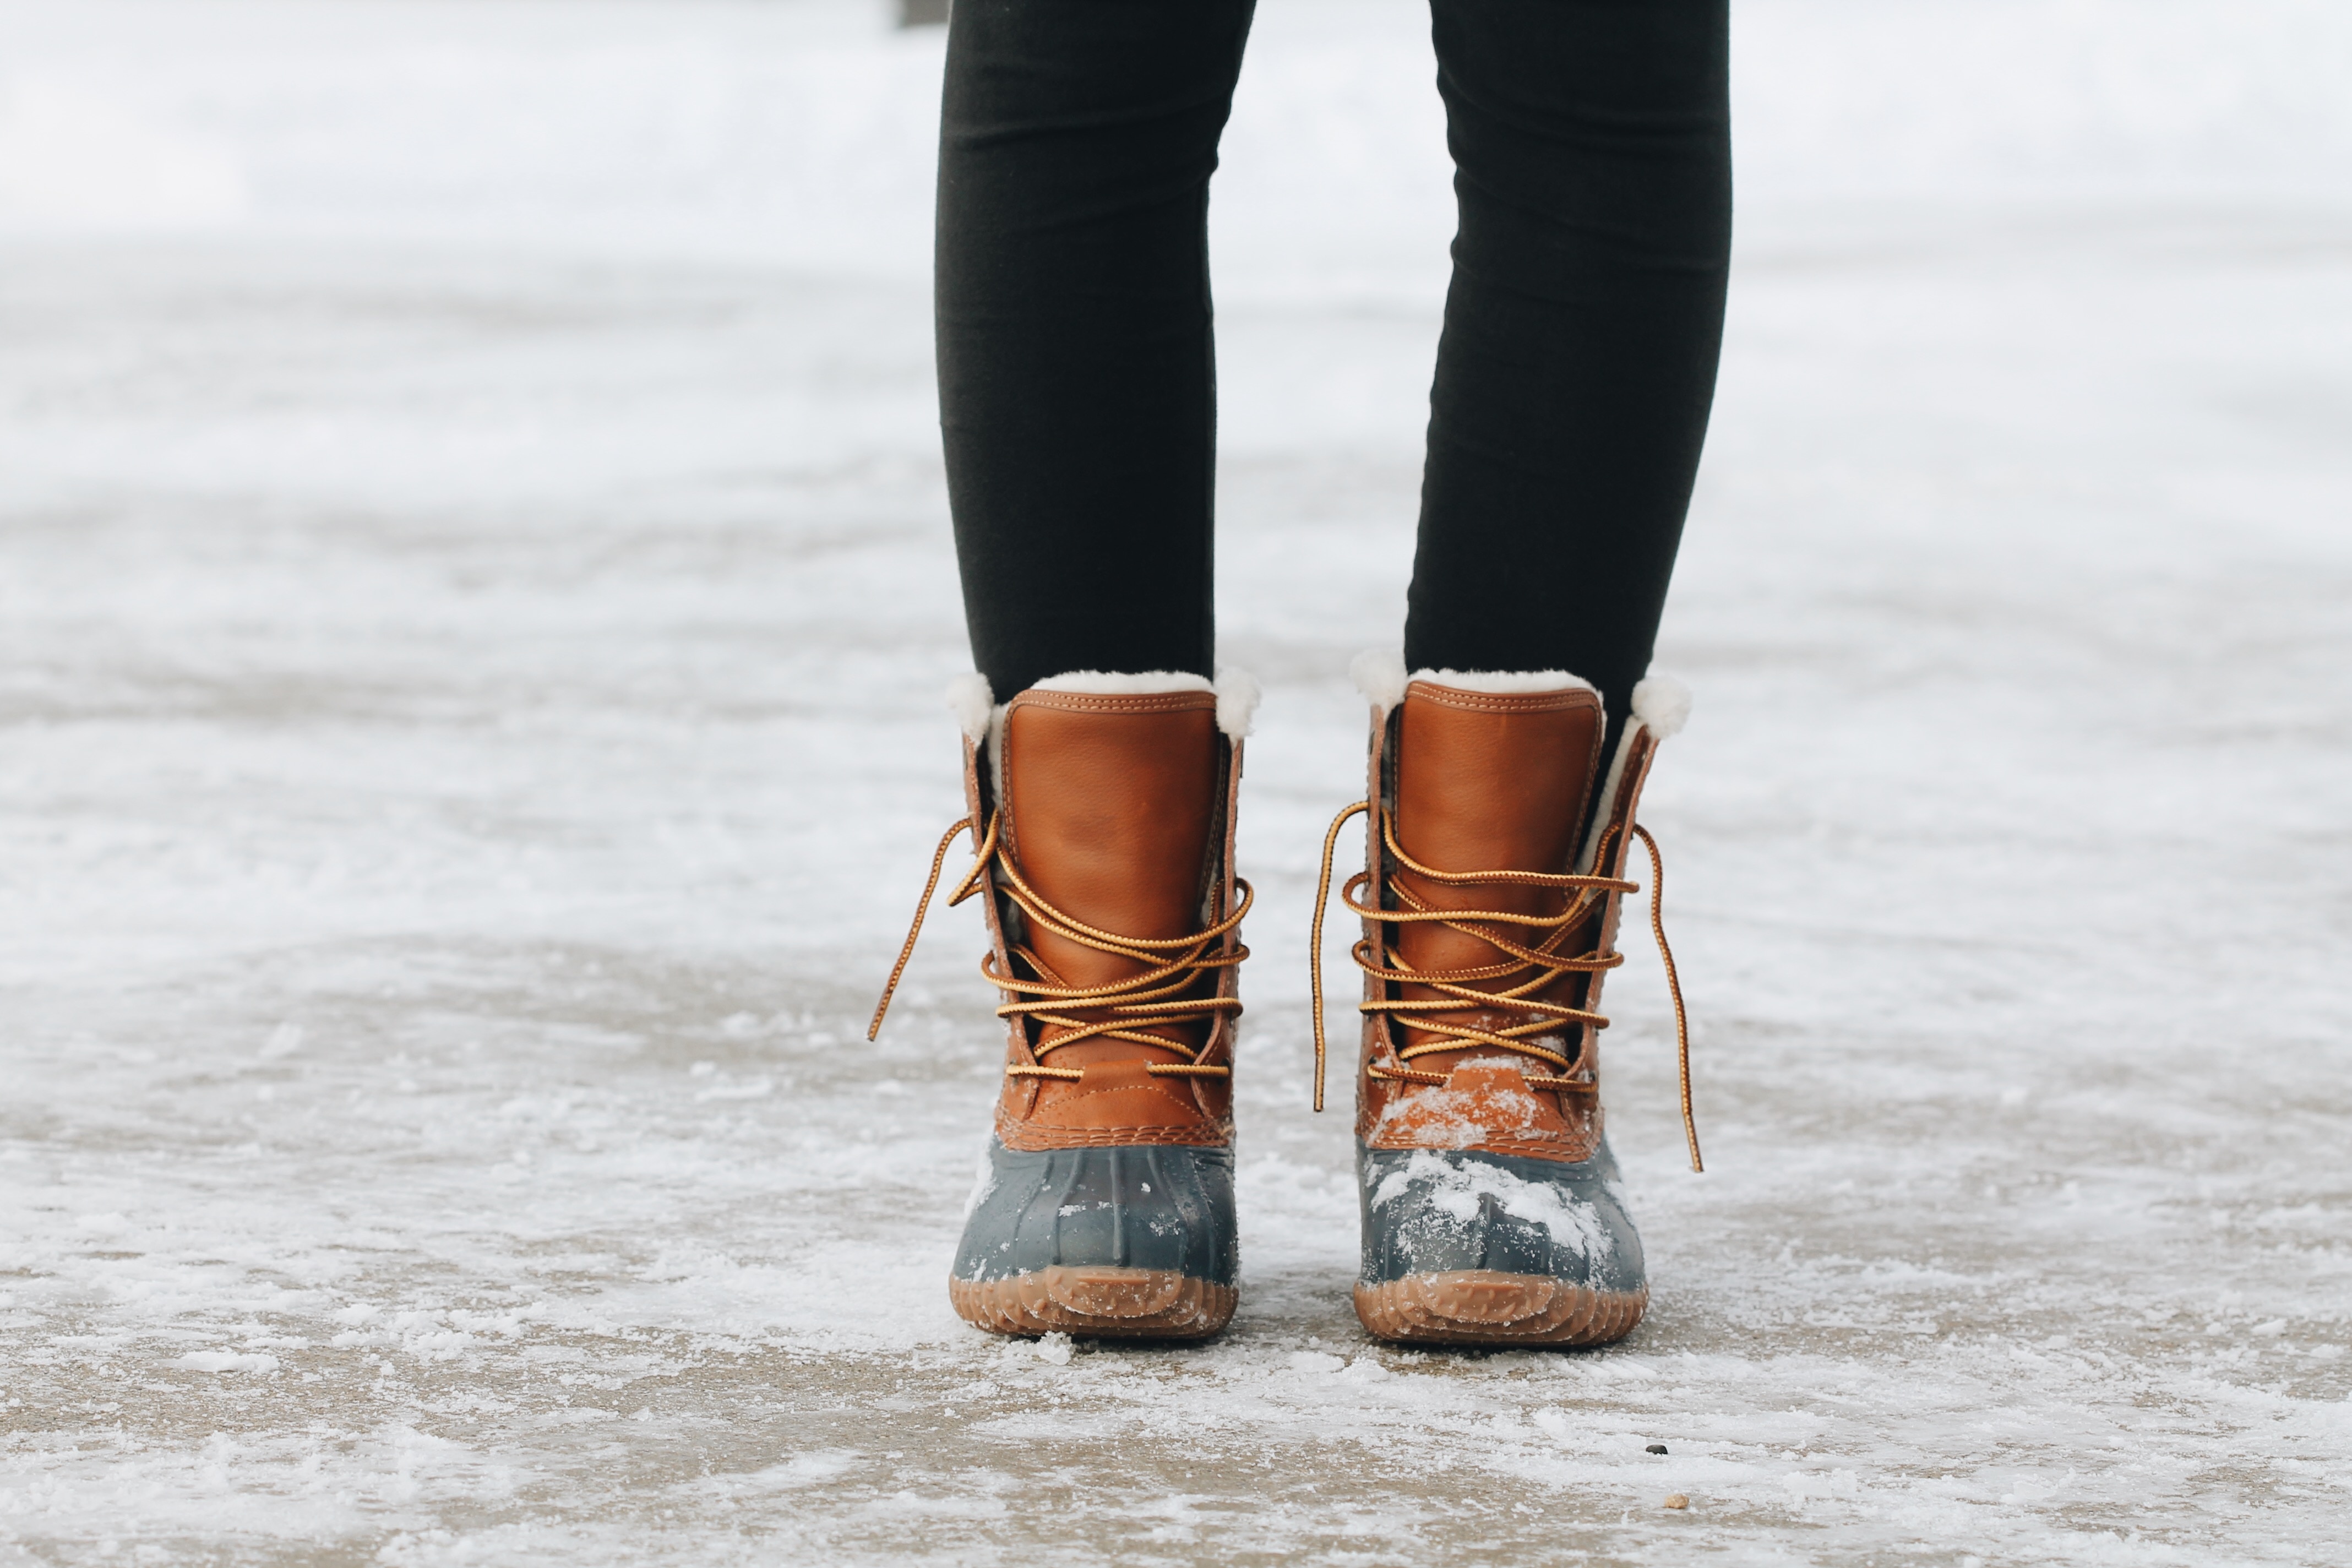 Зимняя обувь на снегу